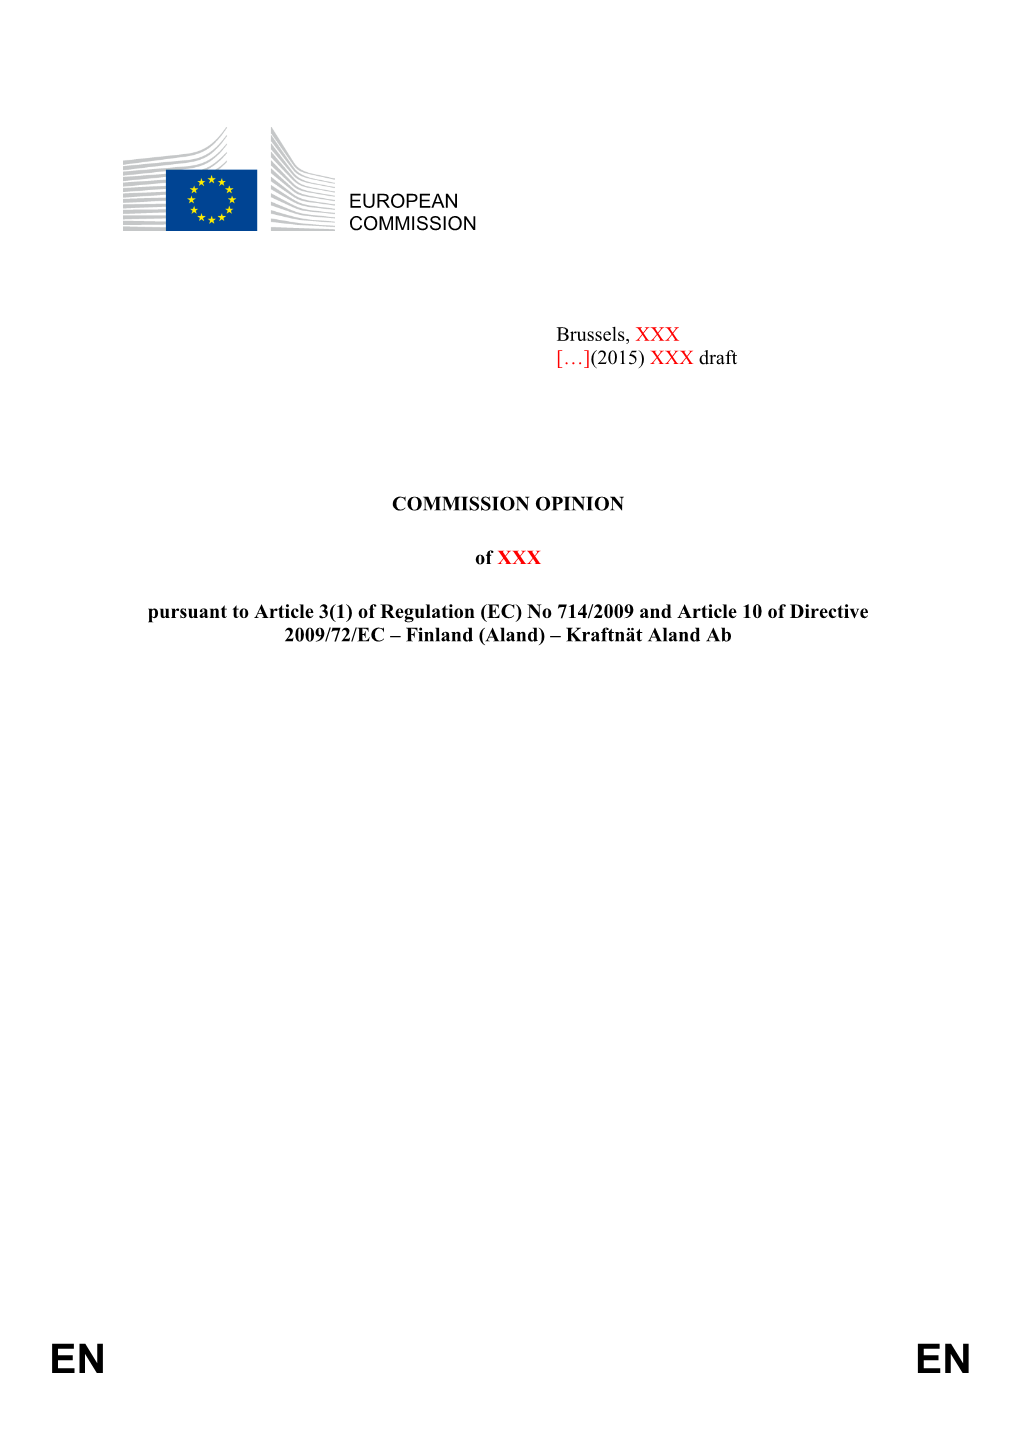 EUROPEAN COMMISSION Brussels, XXX […](2015) XXX Draft